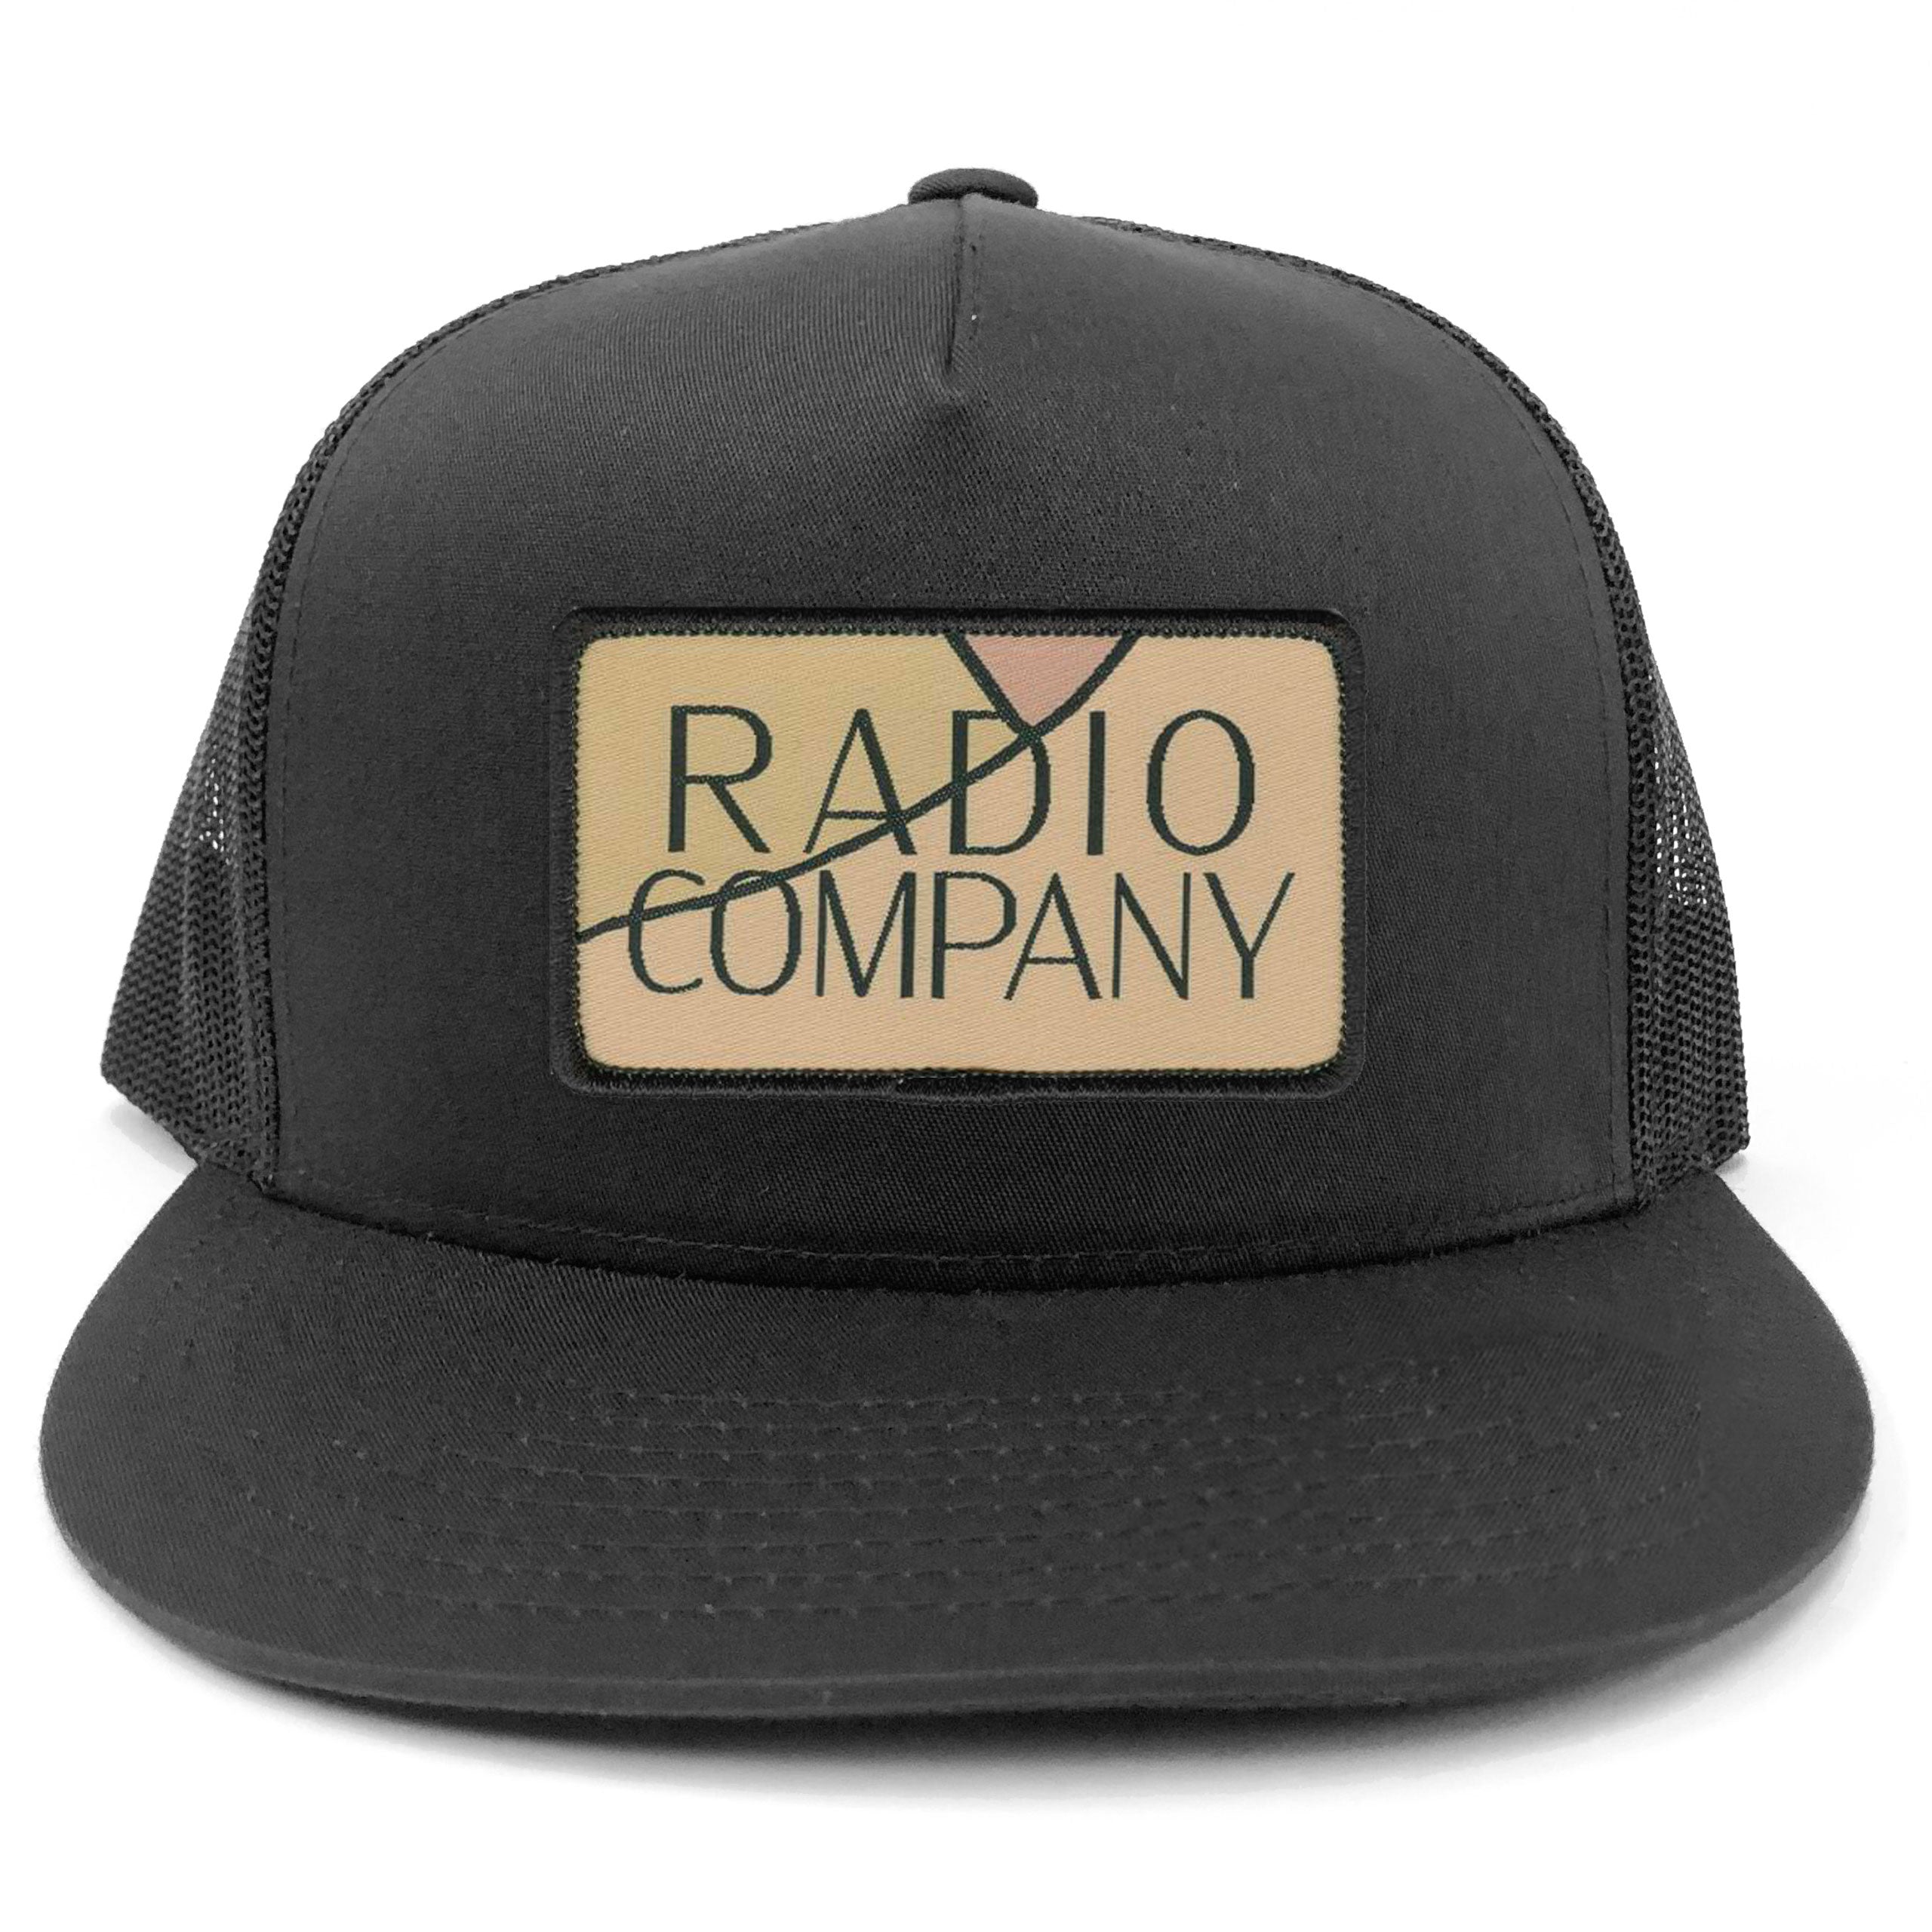 Radio Company Trucker Hat